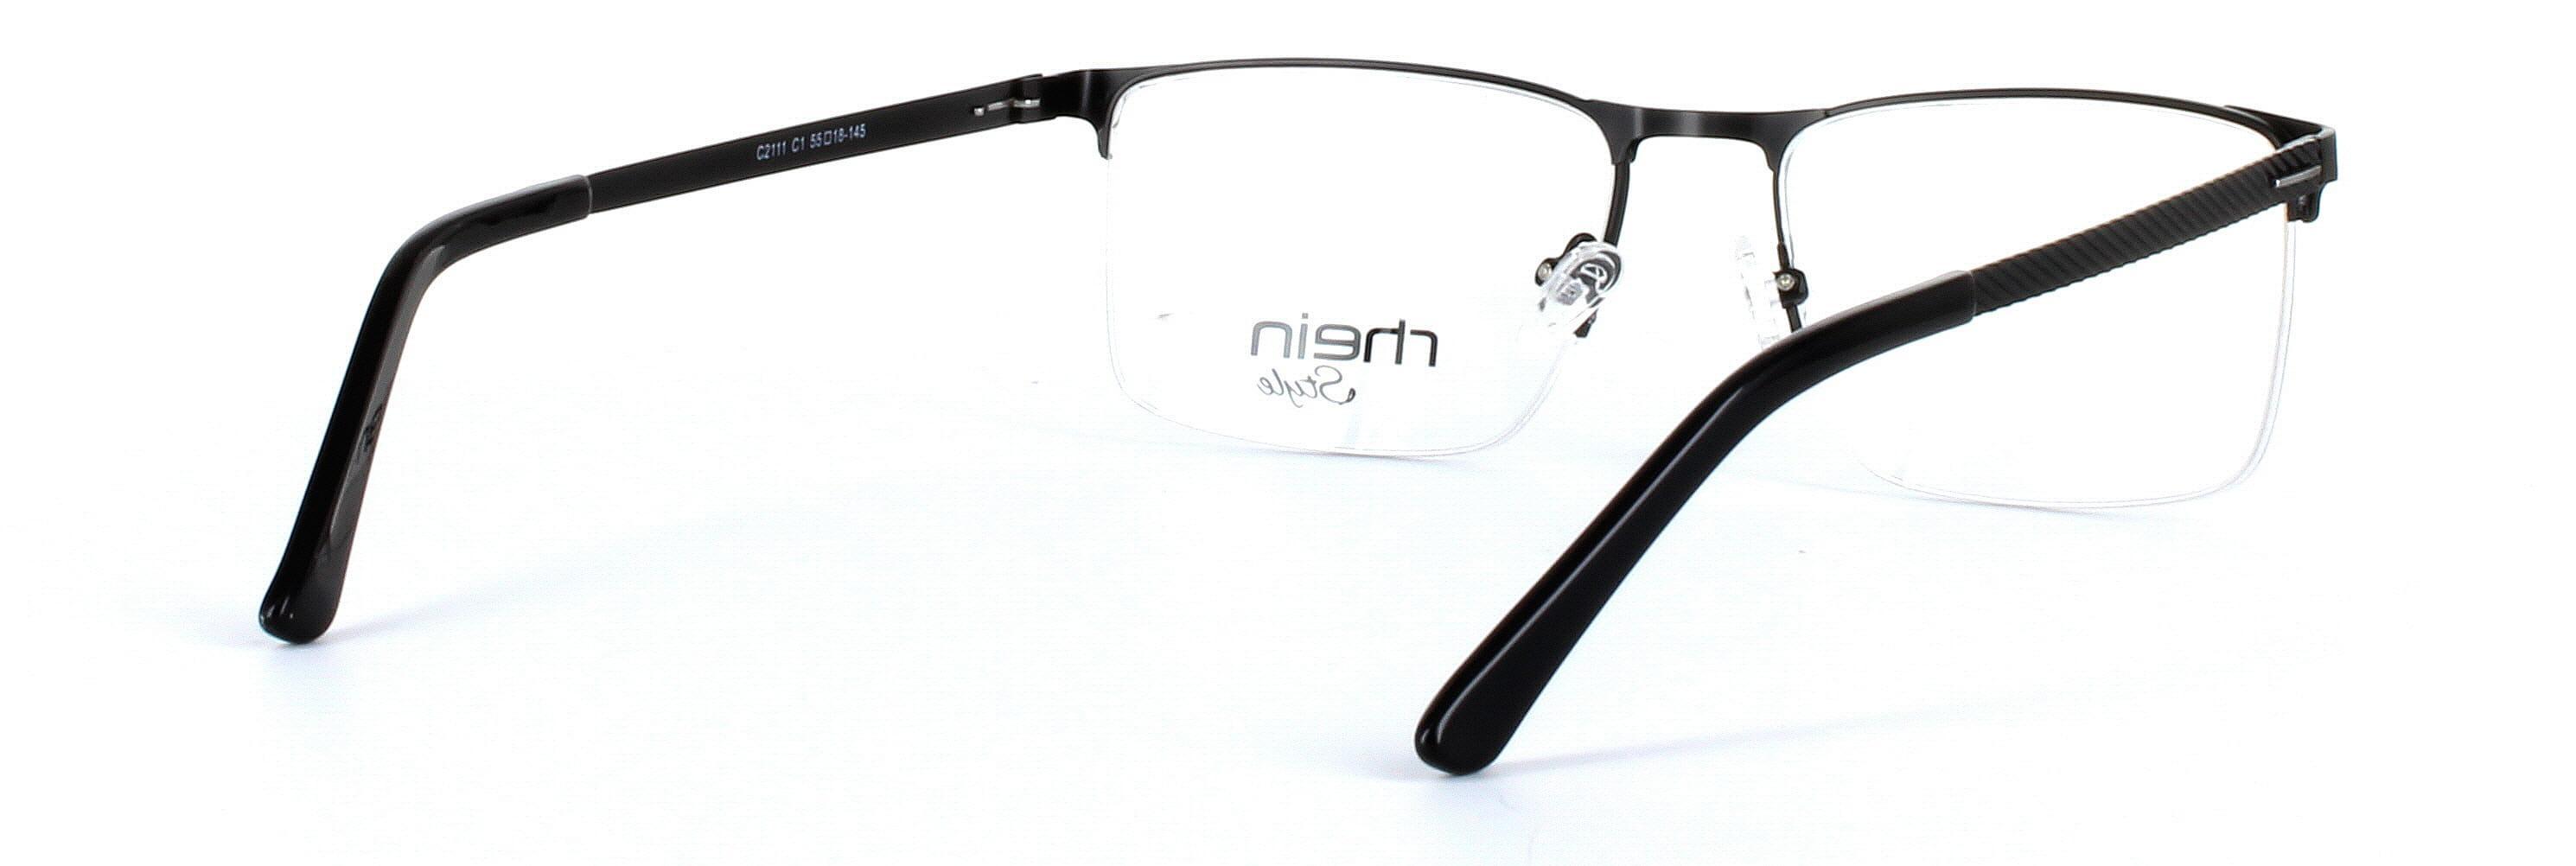 Mansell Matt Black Semi Rimless Rectangular Metal Glasses - Image View 4